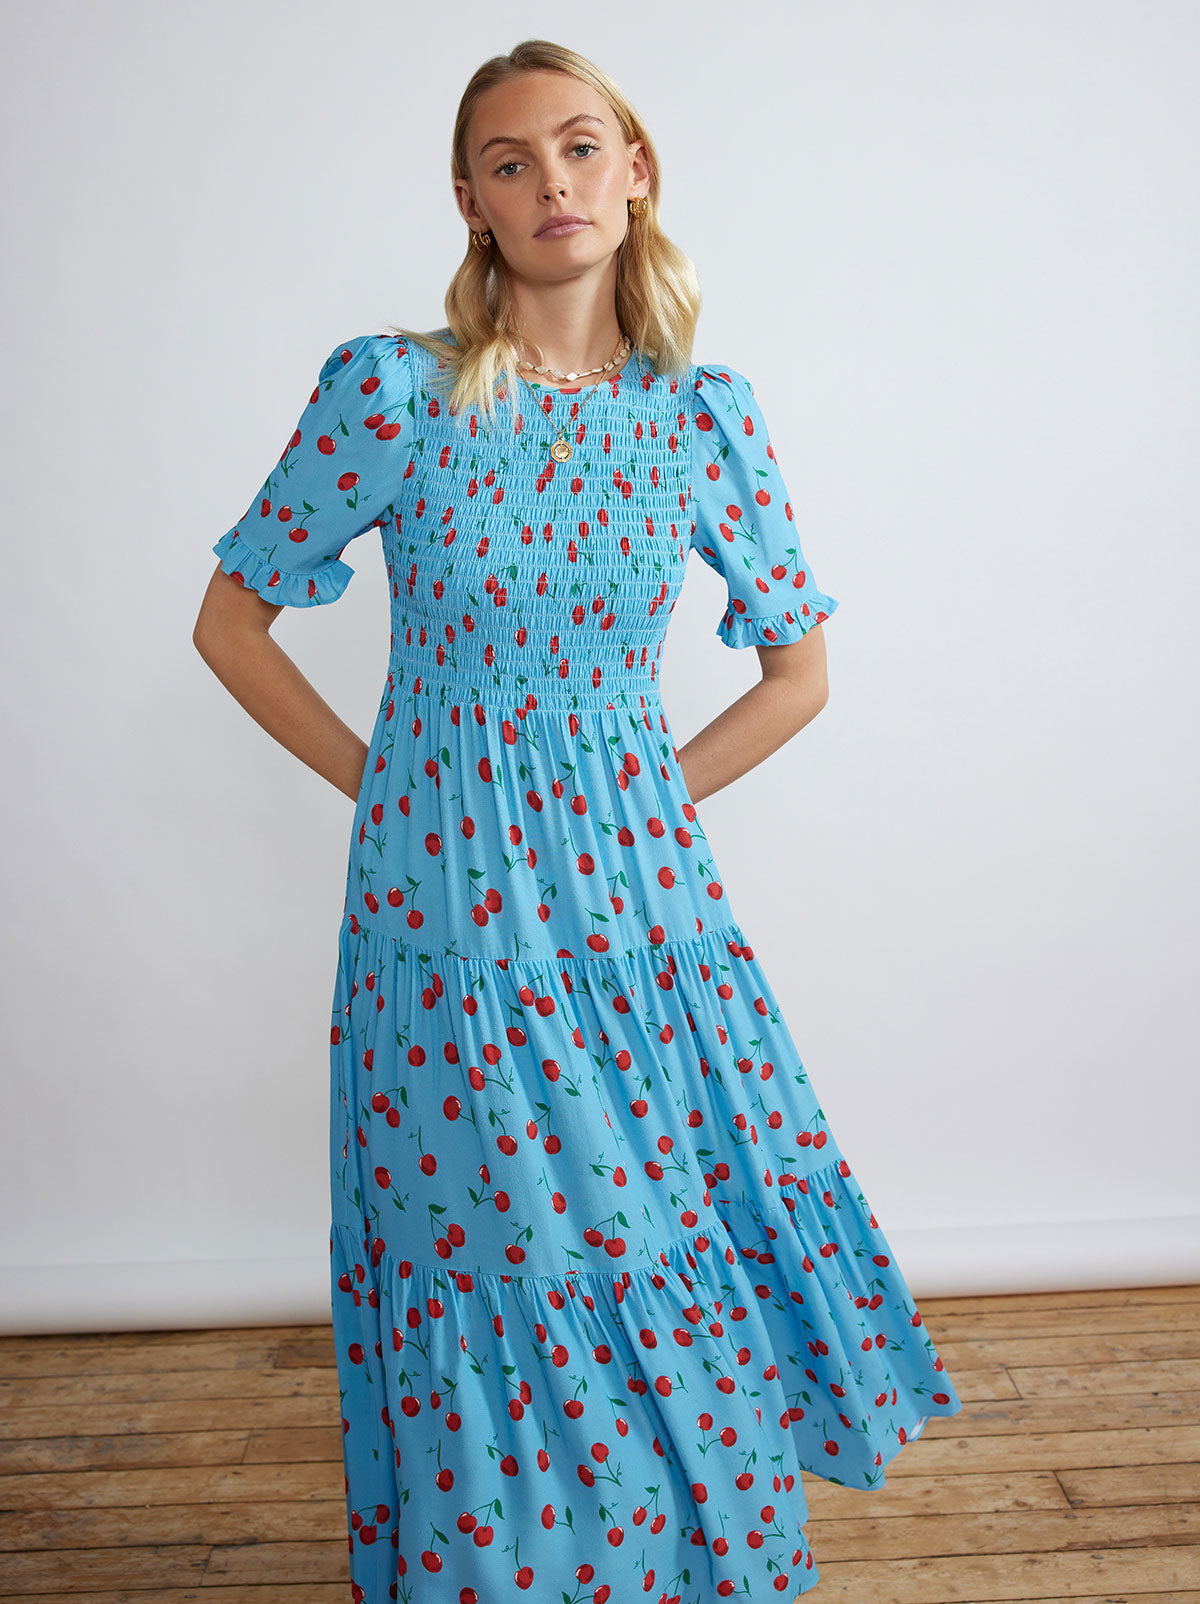 Gracie Blue Cherry Shirred Dress by KITRI Studio